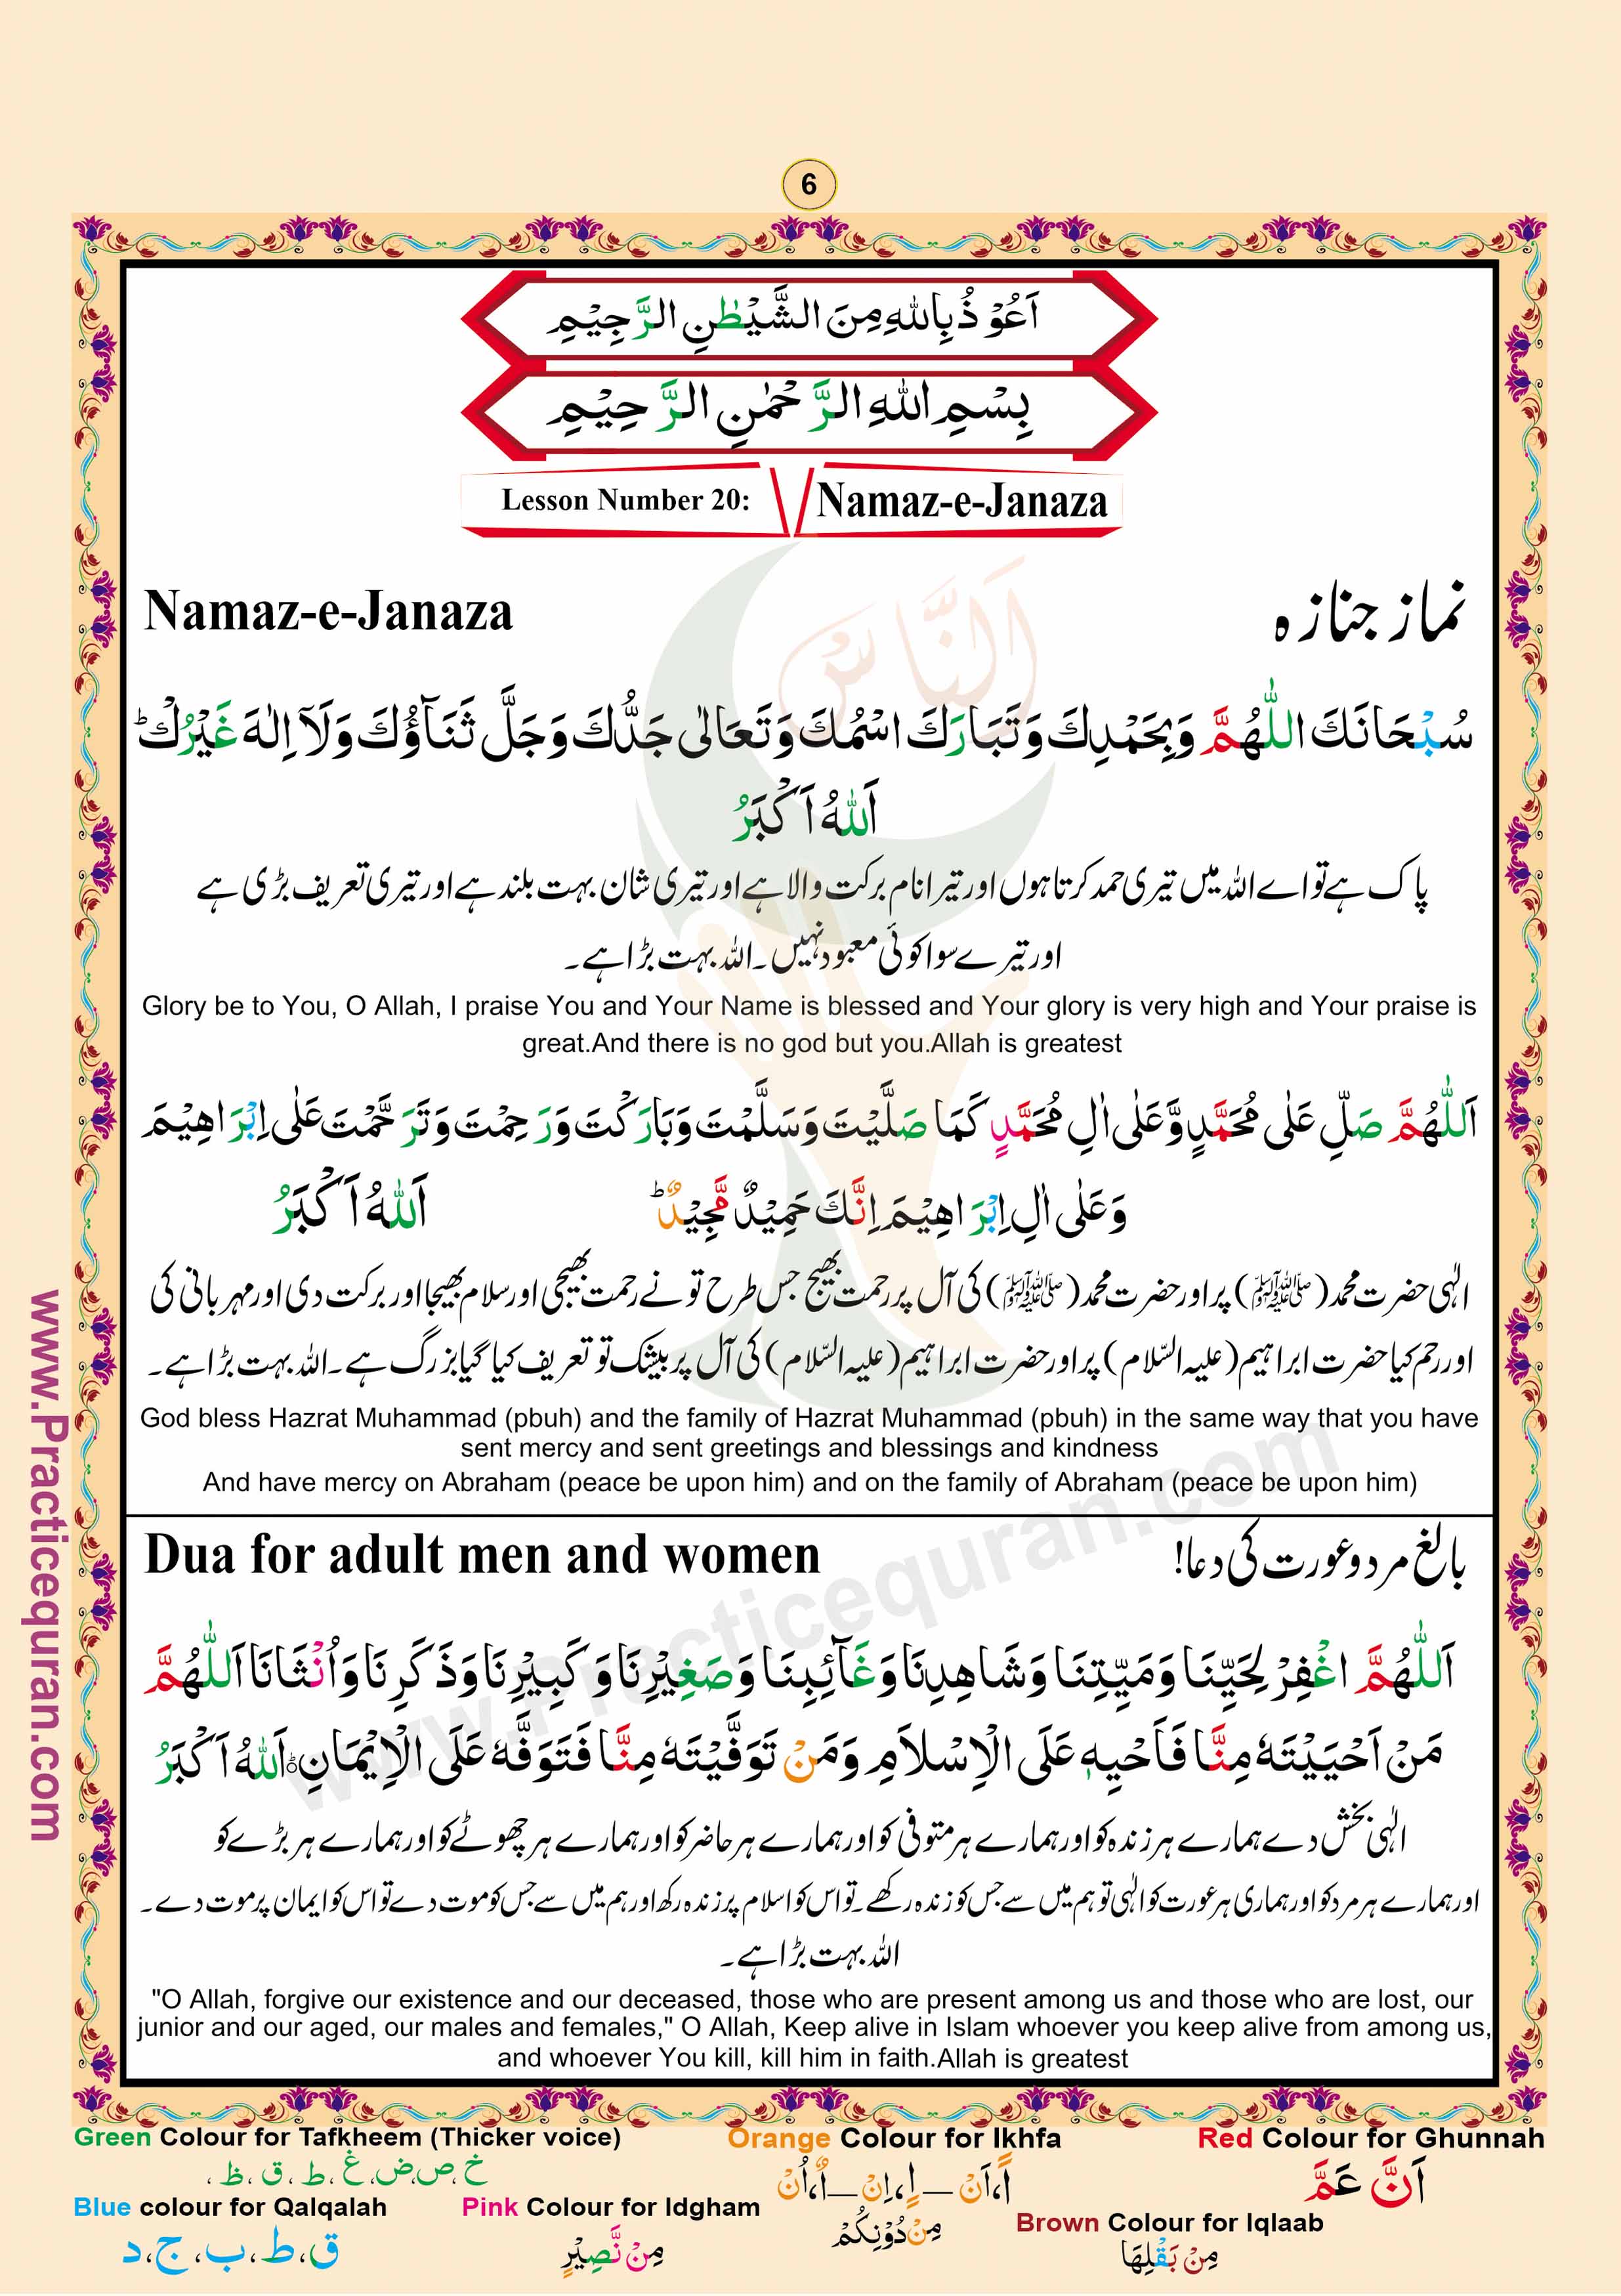 Read Namaz (Salah) Page No 6, Practice Quran